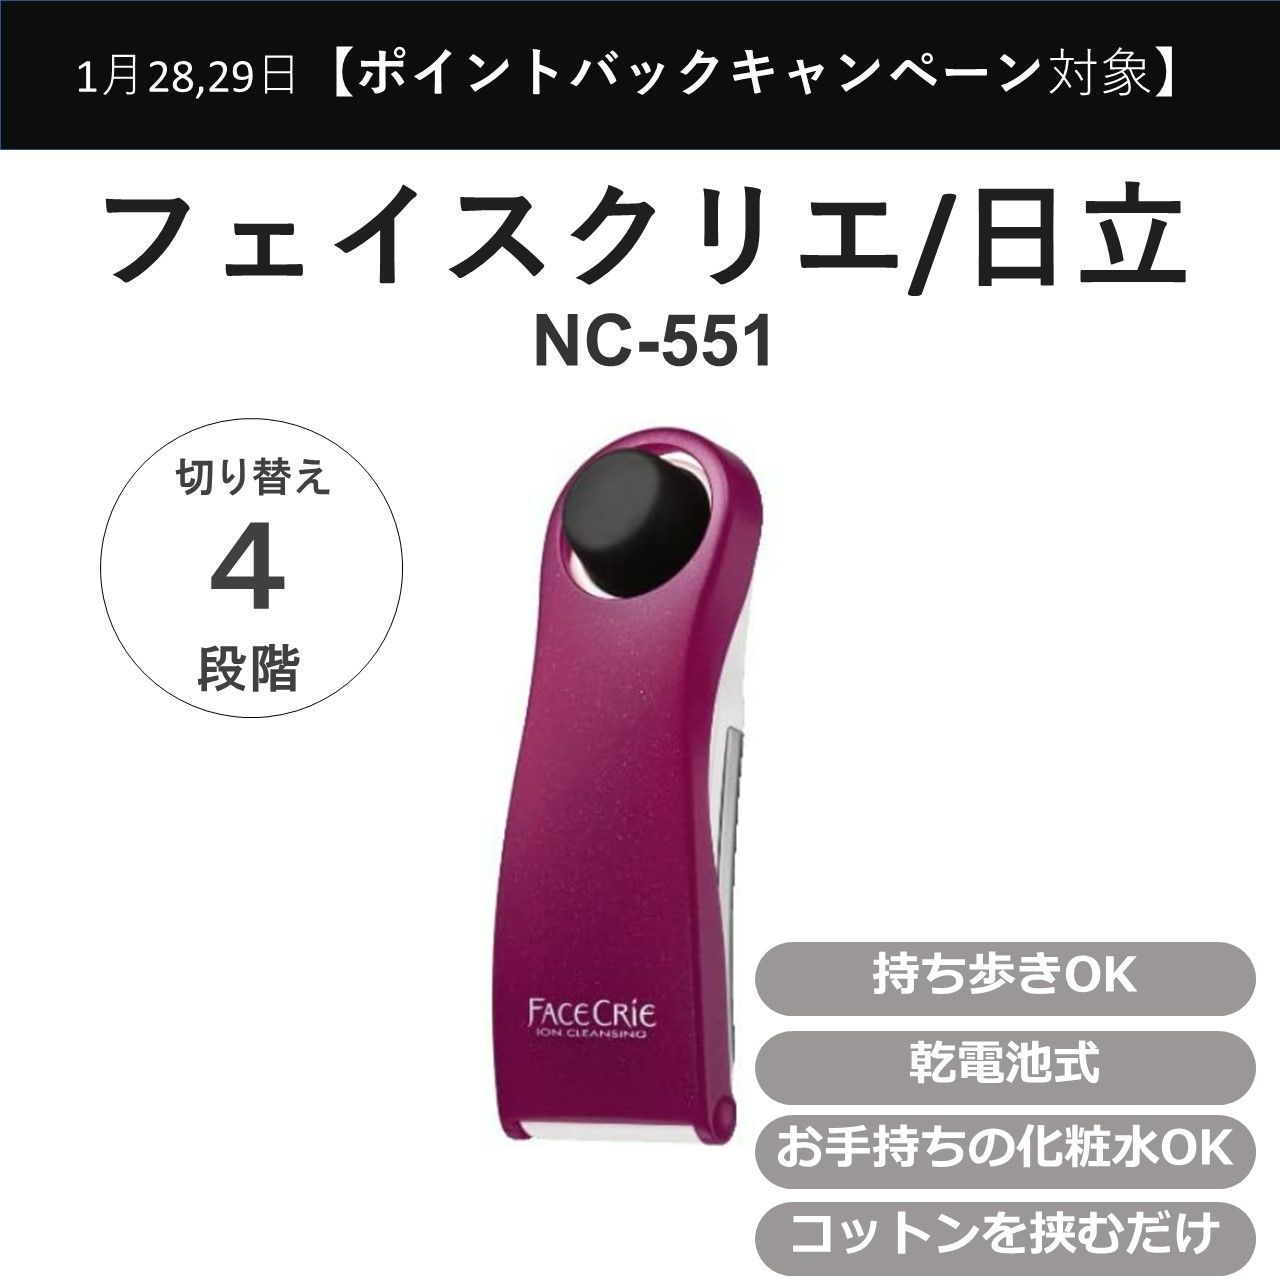 HITACHI イオンクレンジング器 フェイスクリエ NC-550-P 全商品